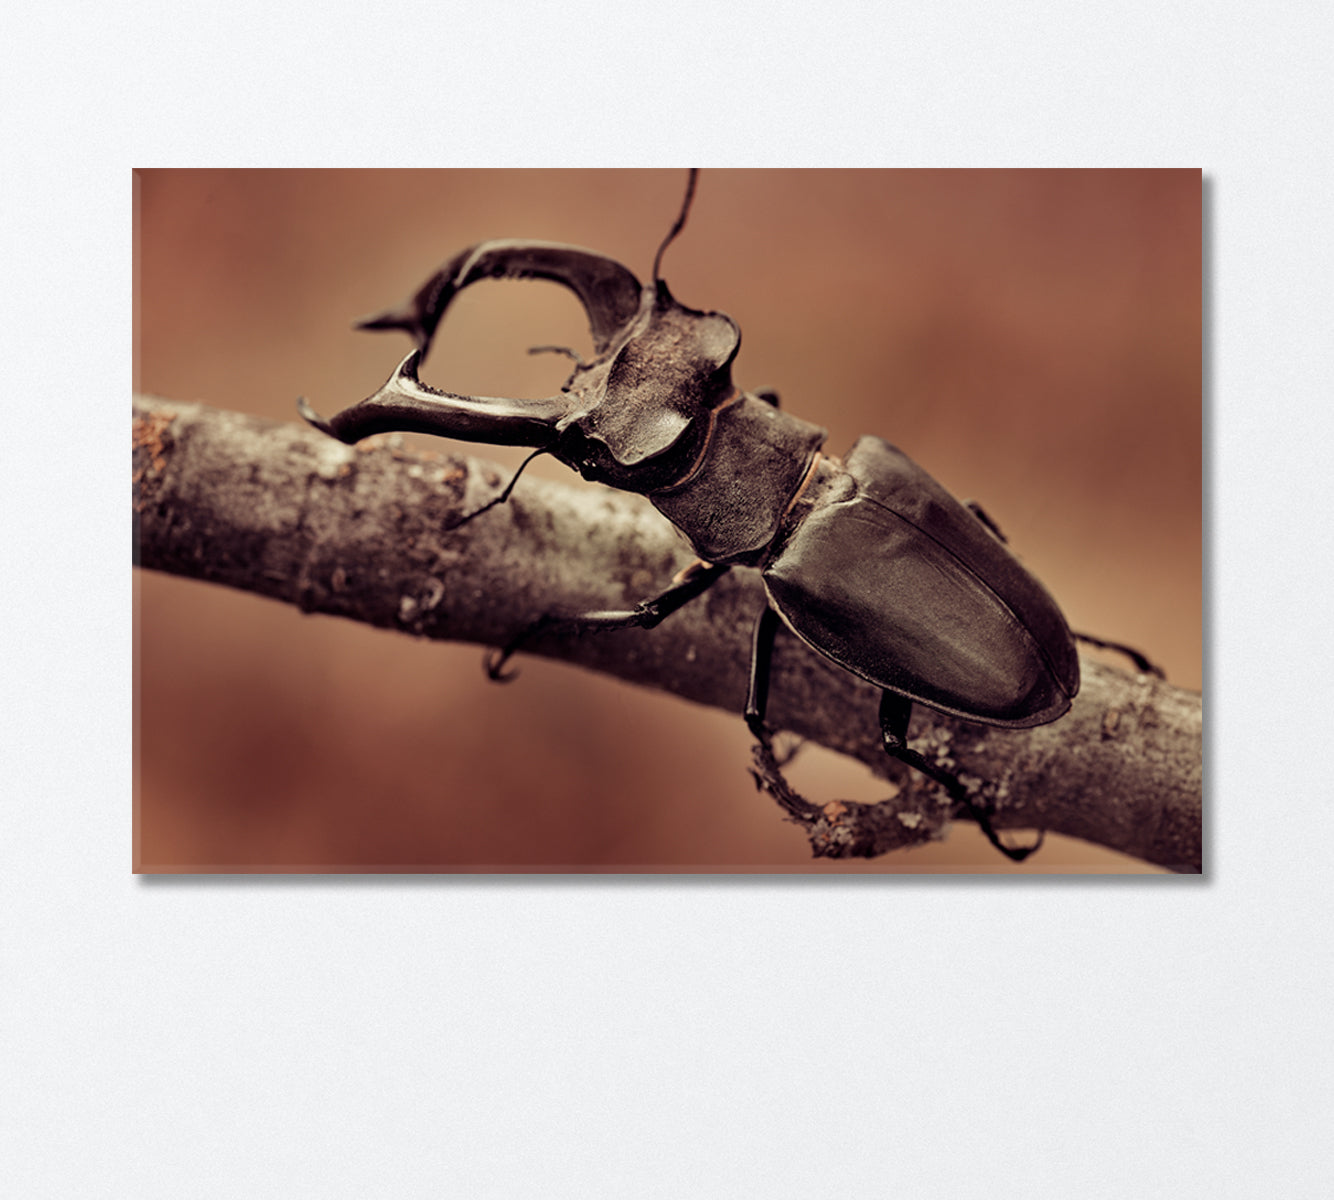 Deer Beetle Close Up Canvas Print-Canvas Print-CetArt-1 Panel-24x16 inches-CetArt